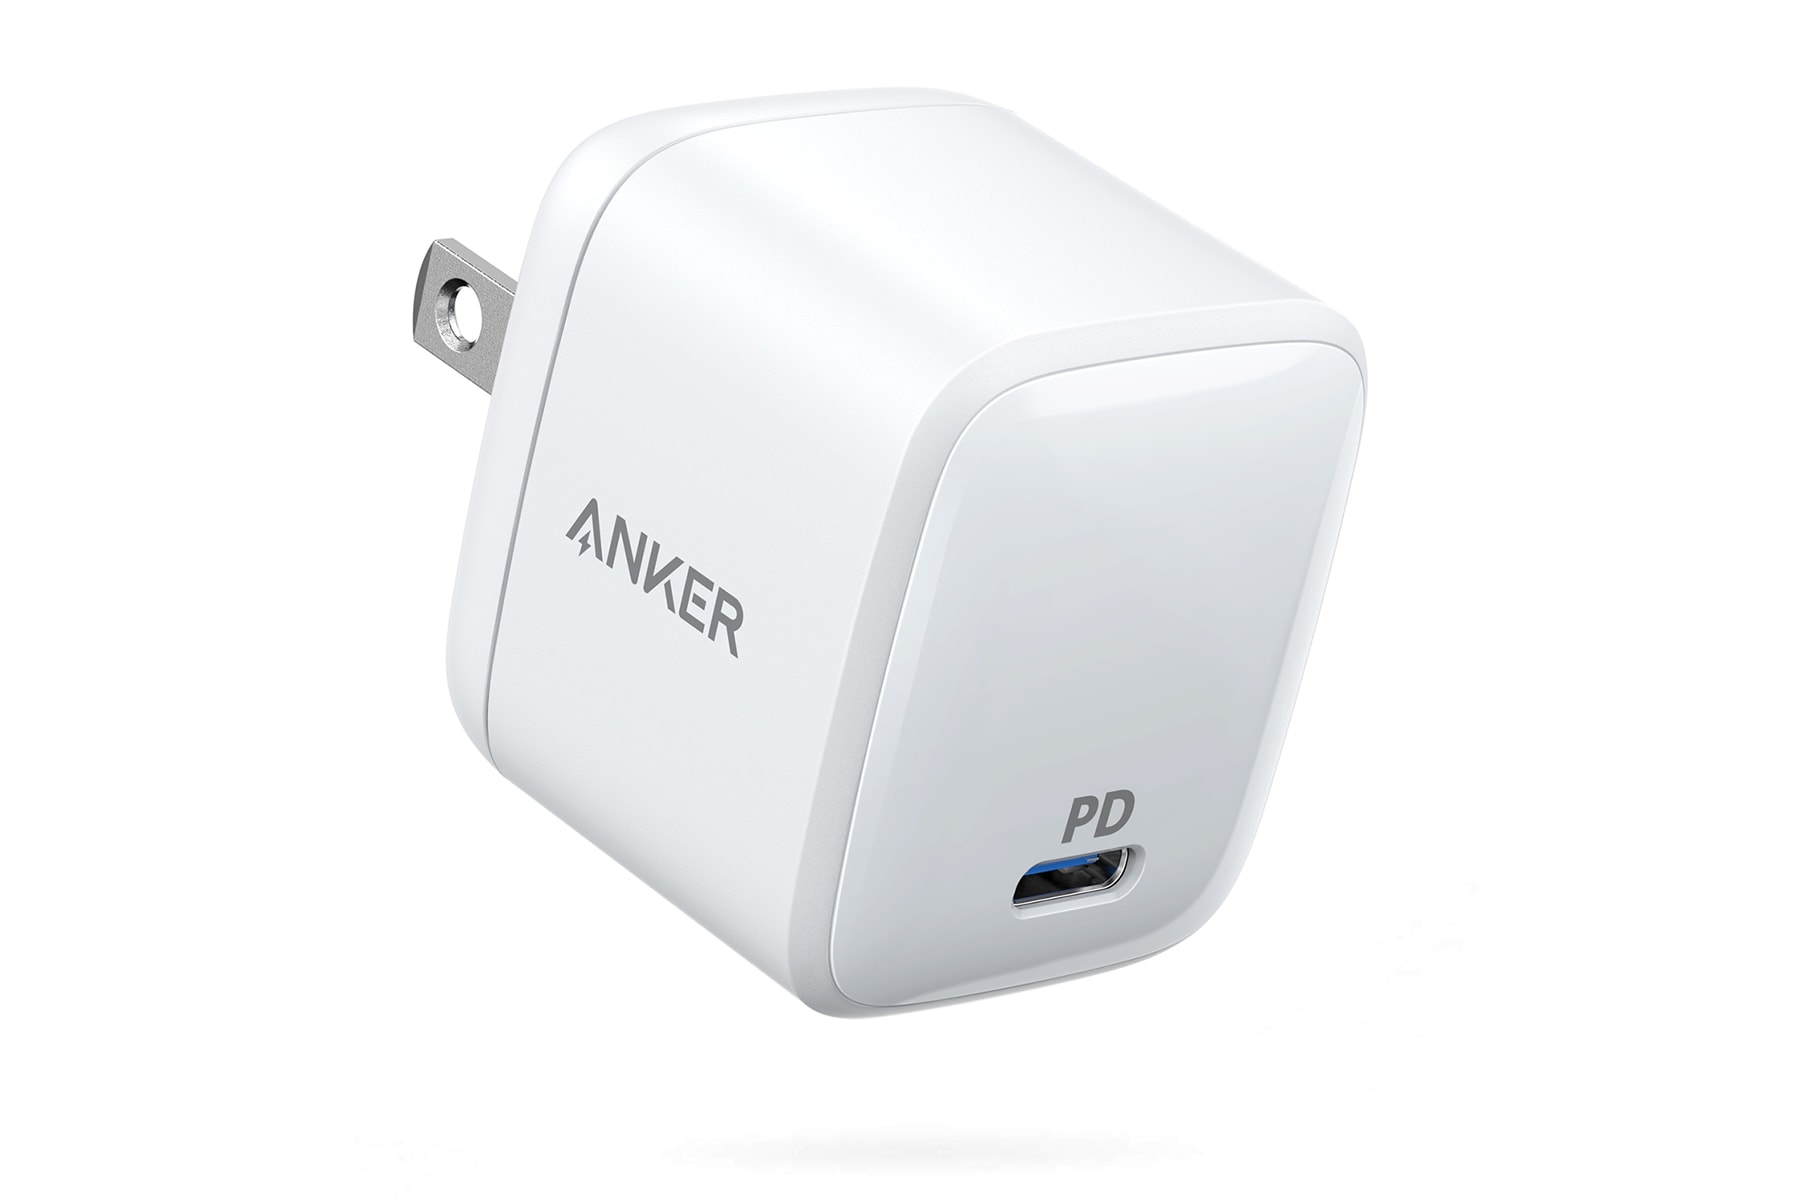 Anker  アンカー 次世代パワー半導体素材 GaN ガン 超コンパクト USB 急速 充電器 発売 Anker PowerPort Atom PD 1